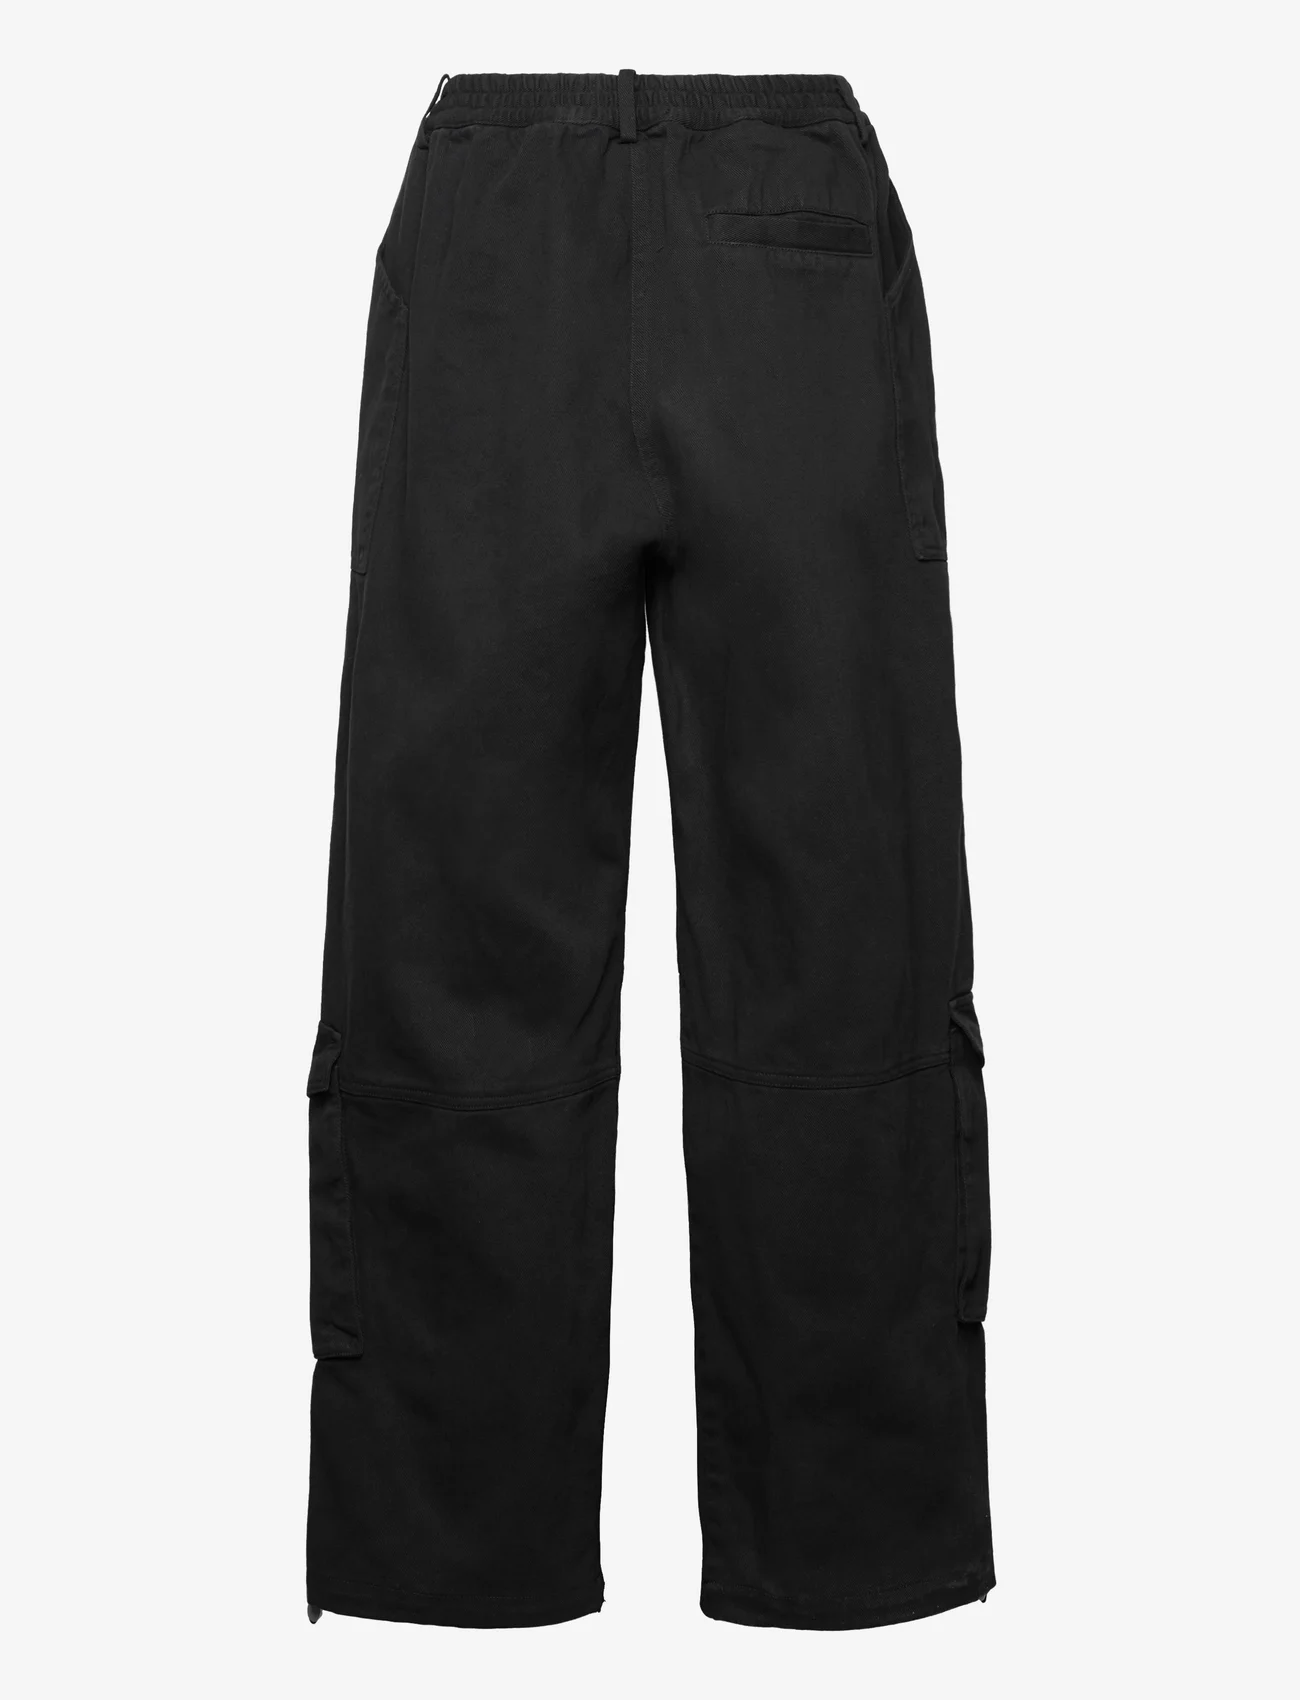 HAN Kjøbenhavn - Cotton Boxy Cargo Trousers - spodnie cargo - black - 1